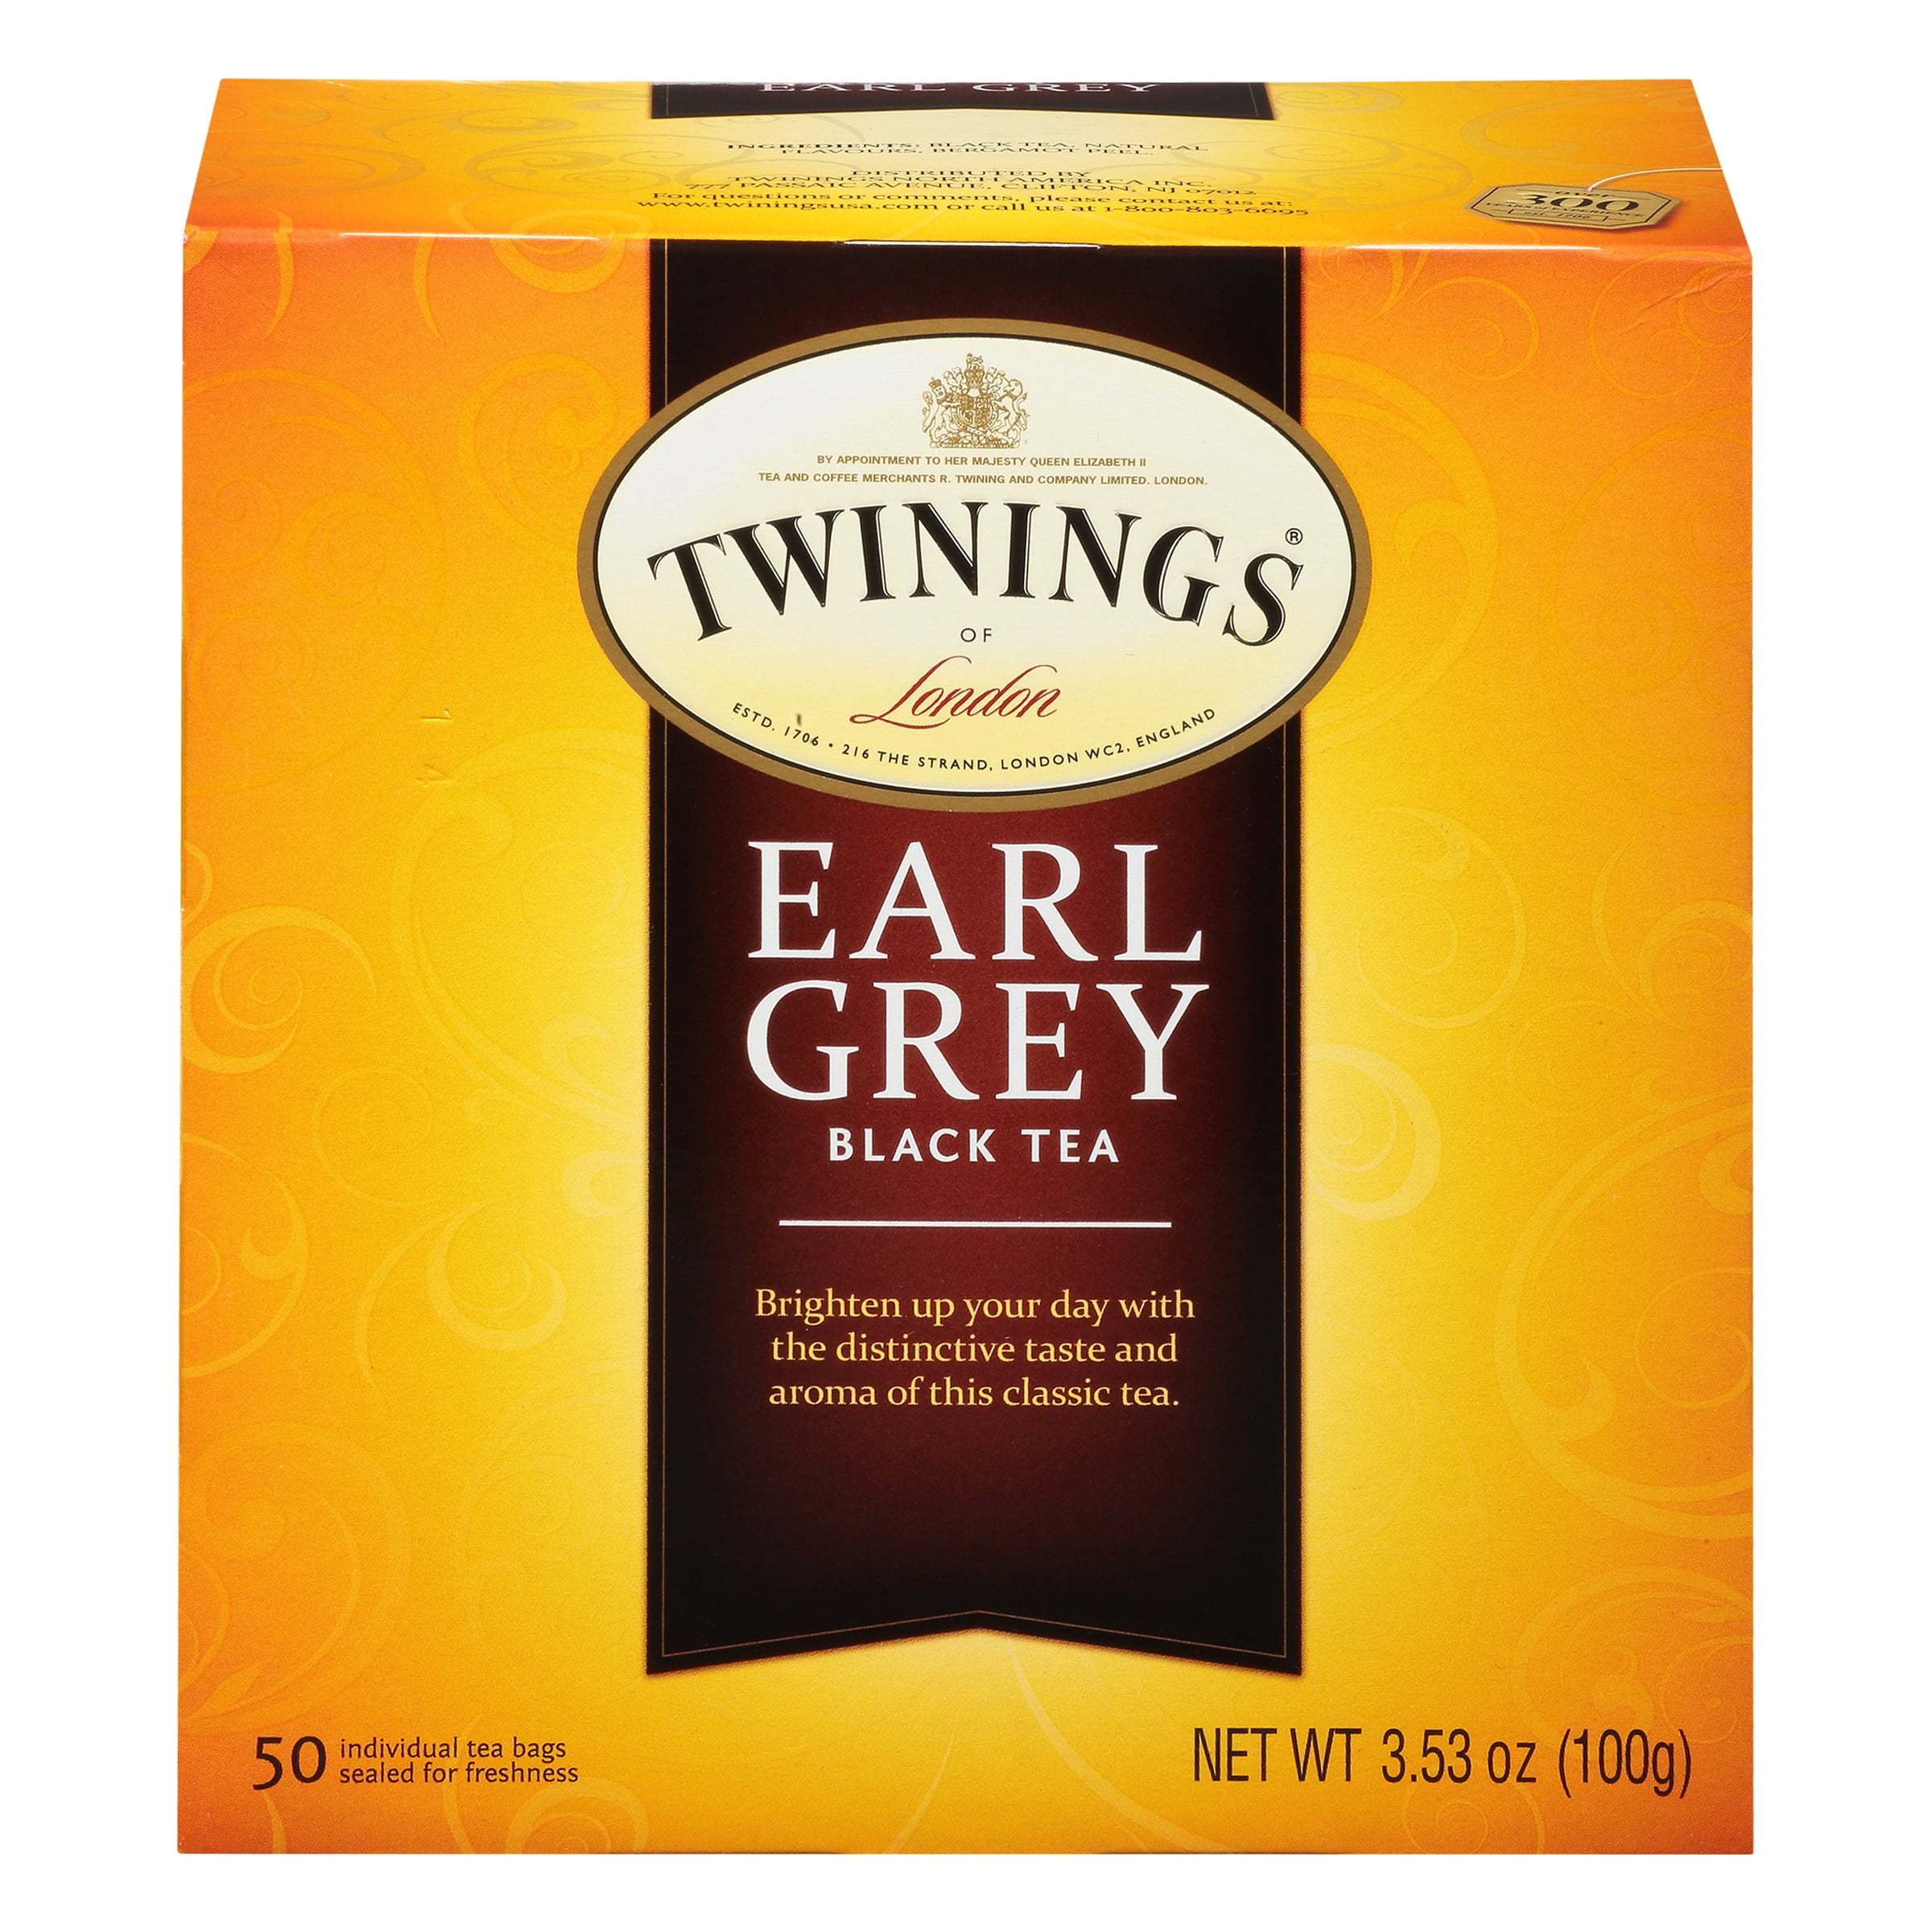 Twinings of London Earl Grey Black Tea Bags, 50 Ct, 3.53 oz